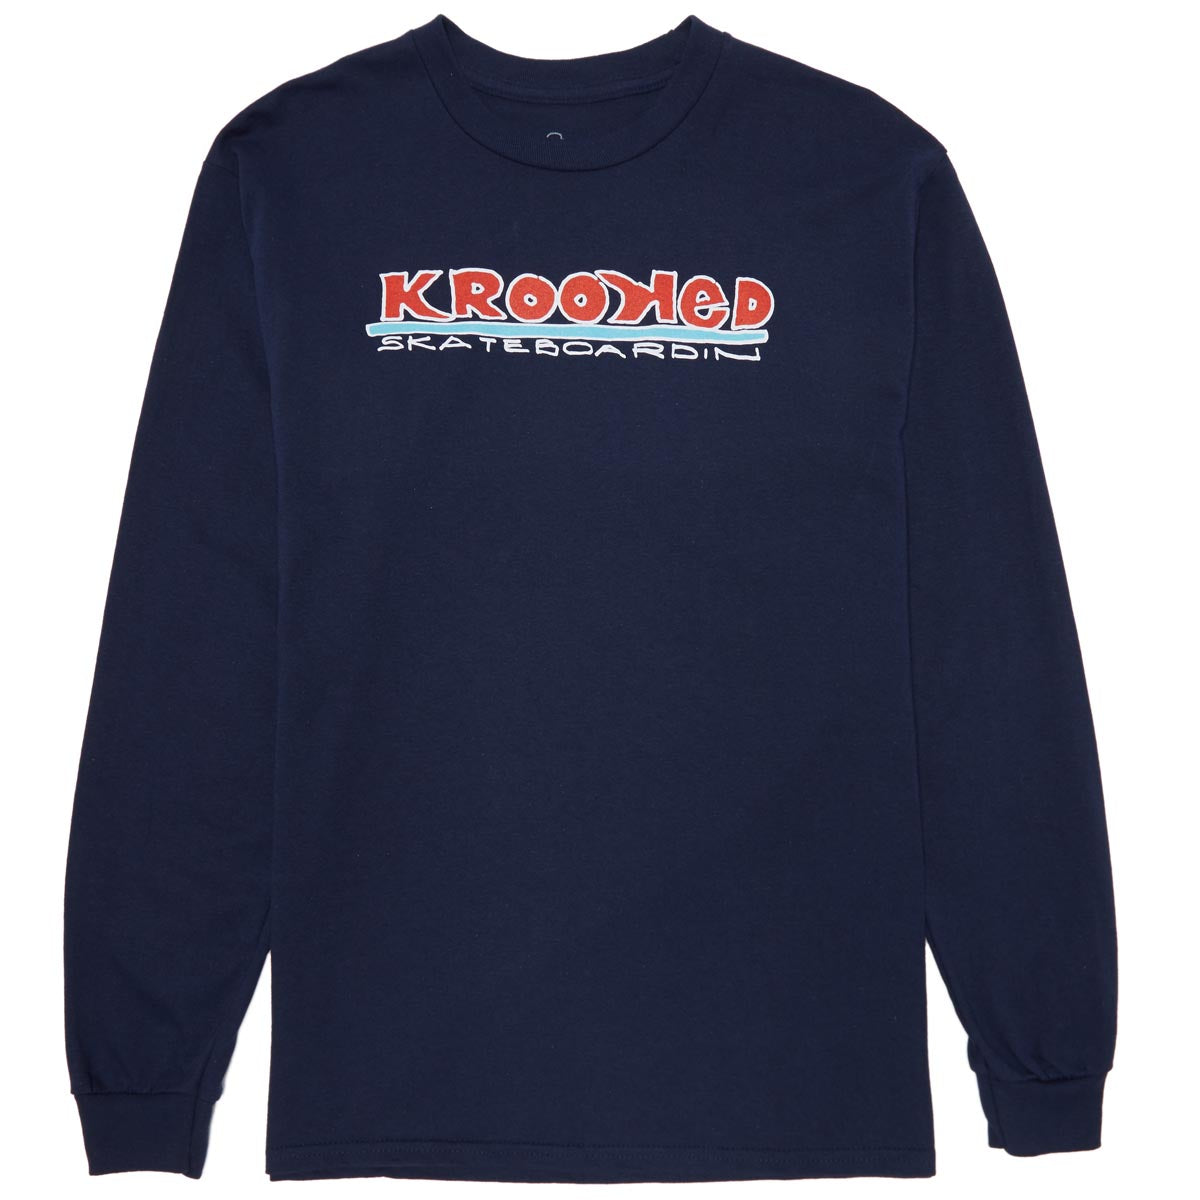 Krooked Skateboardin Long Sleeve T-Shirt - Navy/Red/White/Blue image 1